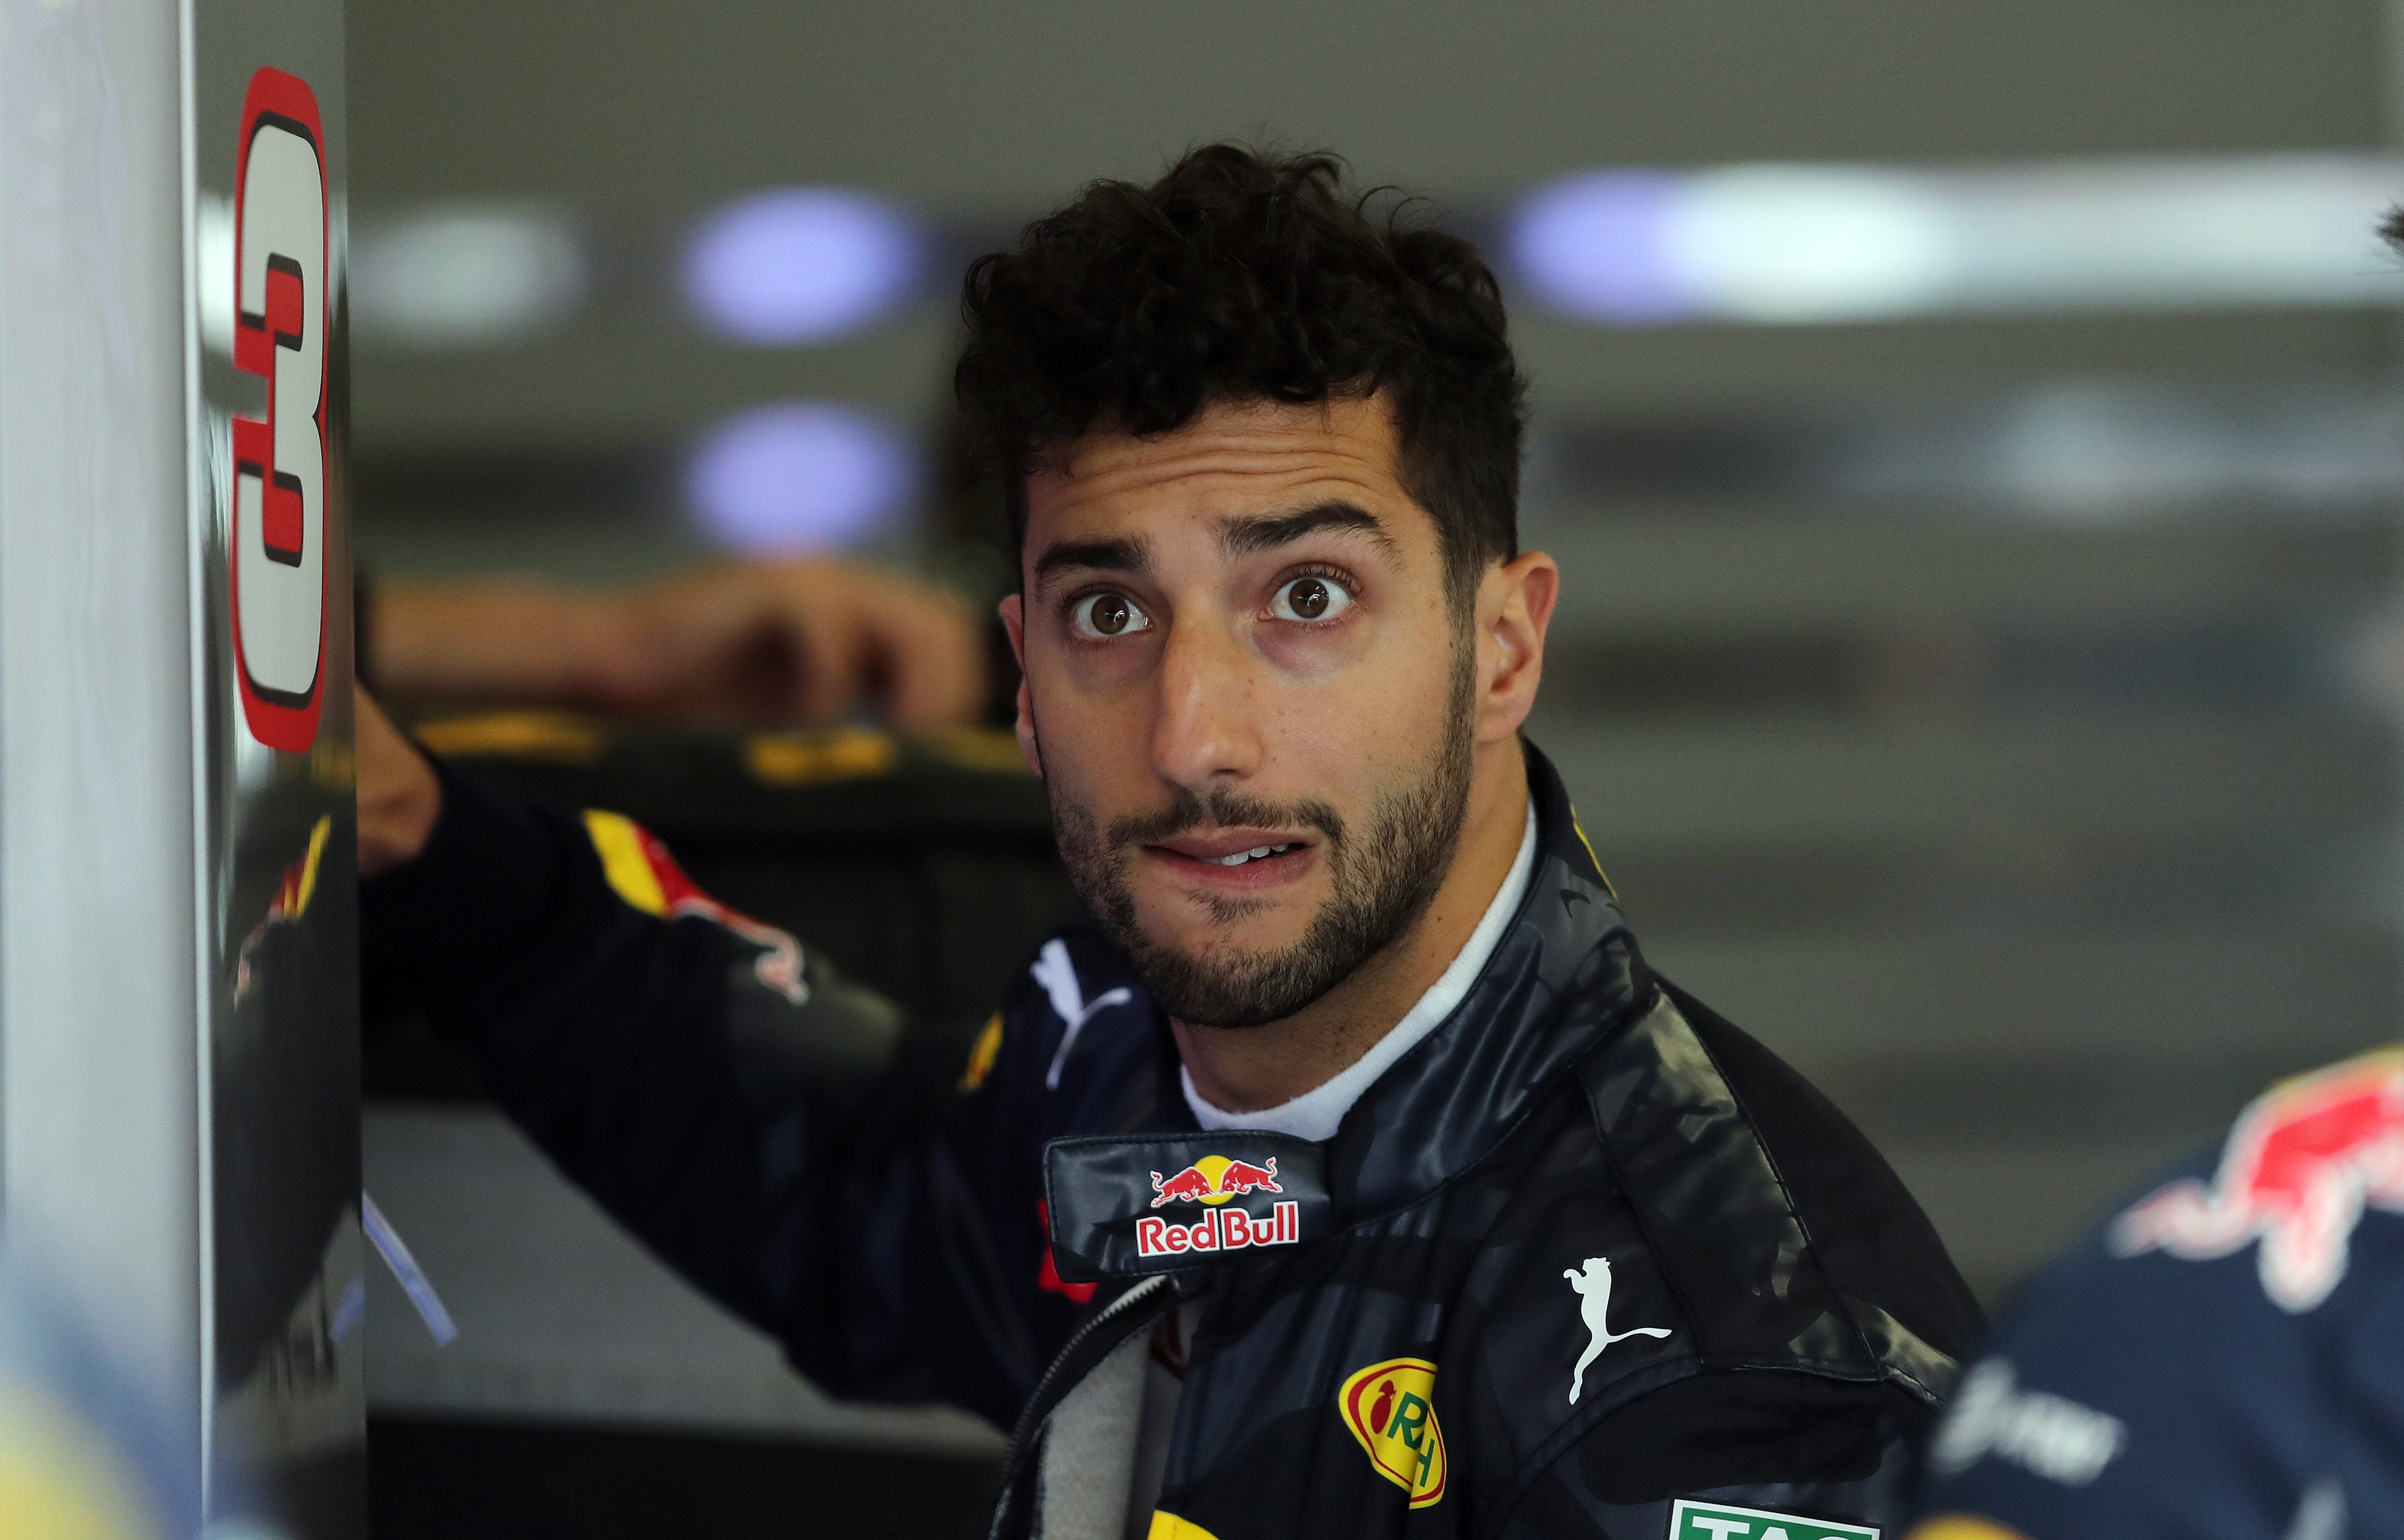 Red Bull's Daniel Ricciardo during third practice for the 2016 British Grand Prix at Silverstone Circuit, Towcester.